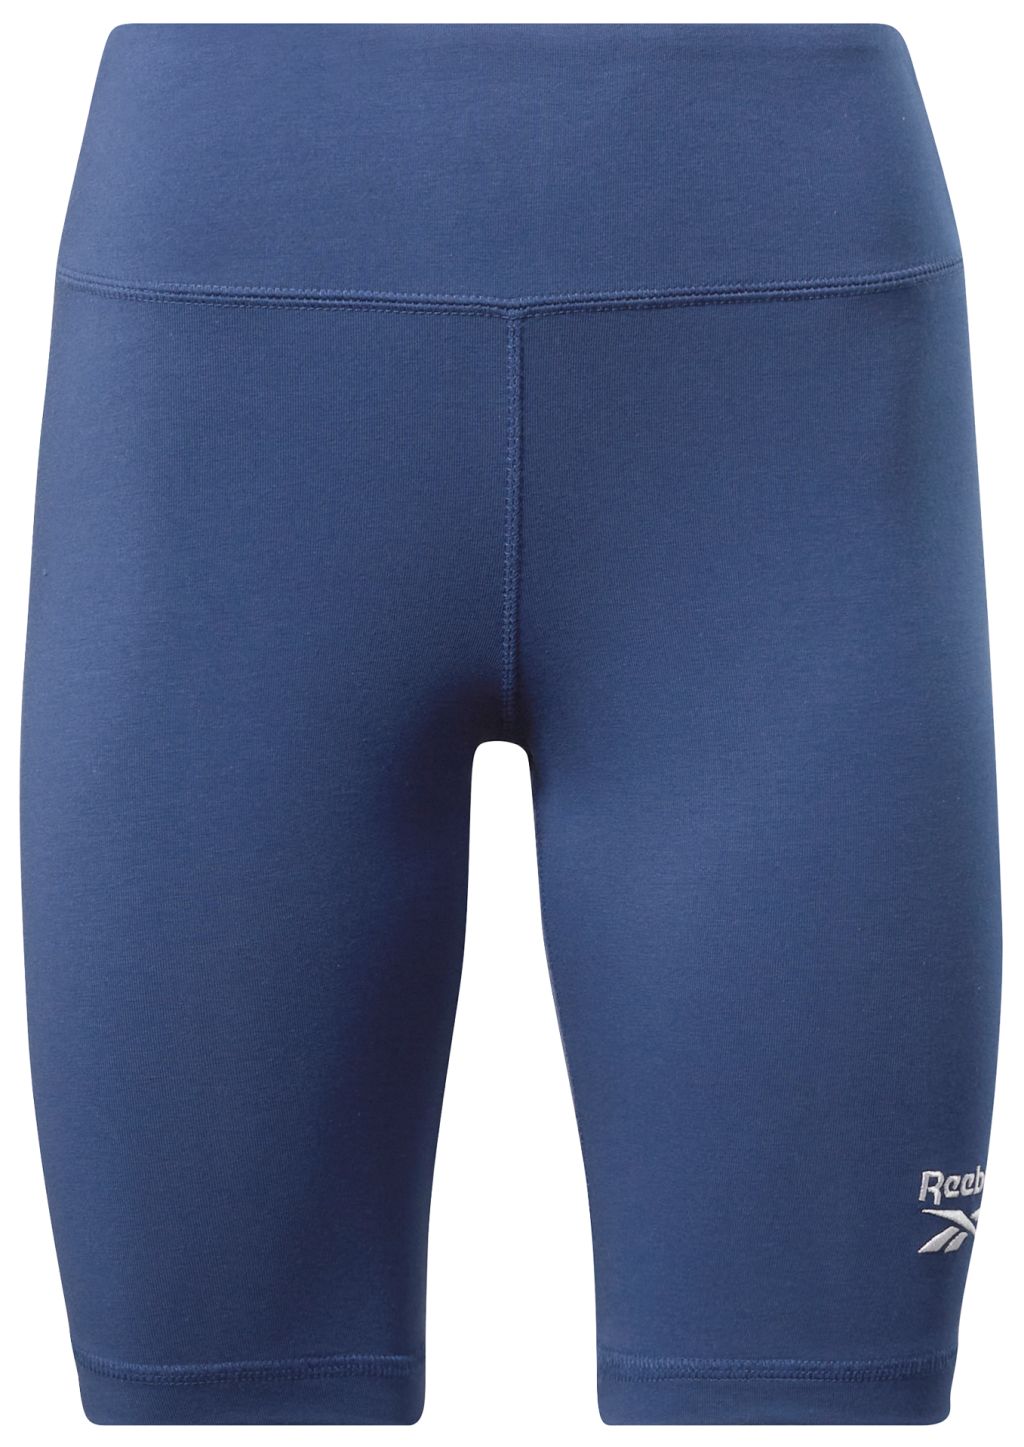 Women\'s shorts Reebok RI SL Fitted Short - batik blue | Tennis Zone |  Tennis Shop